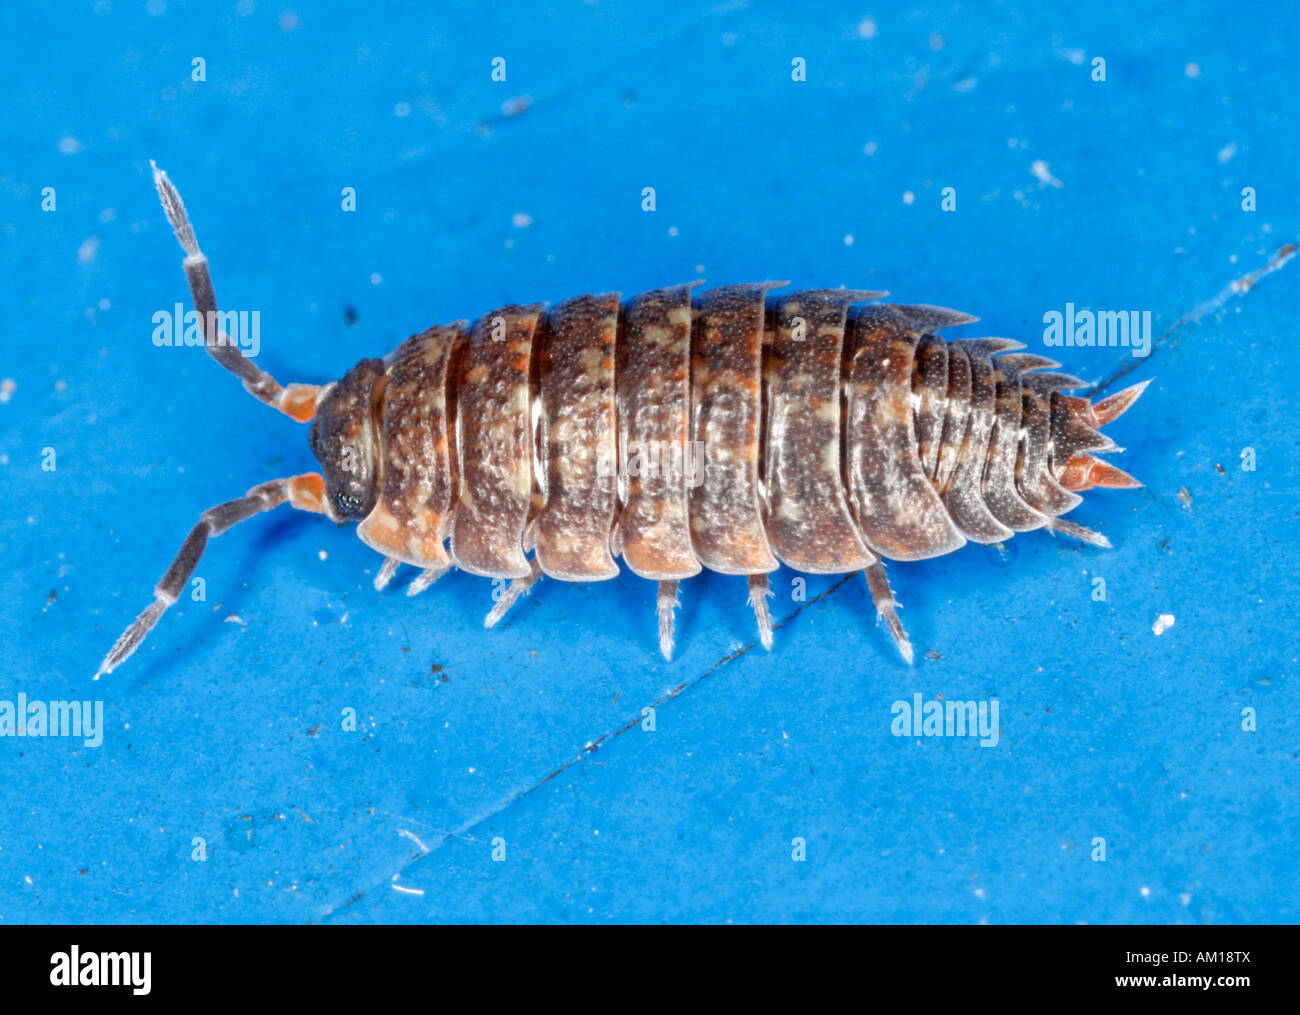 Bug on blue ground Stock Photo